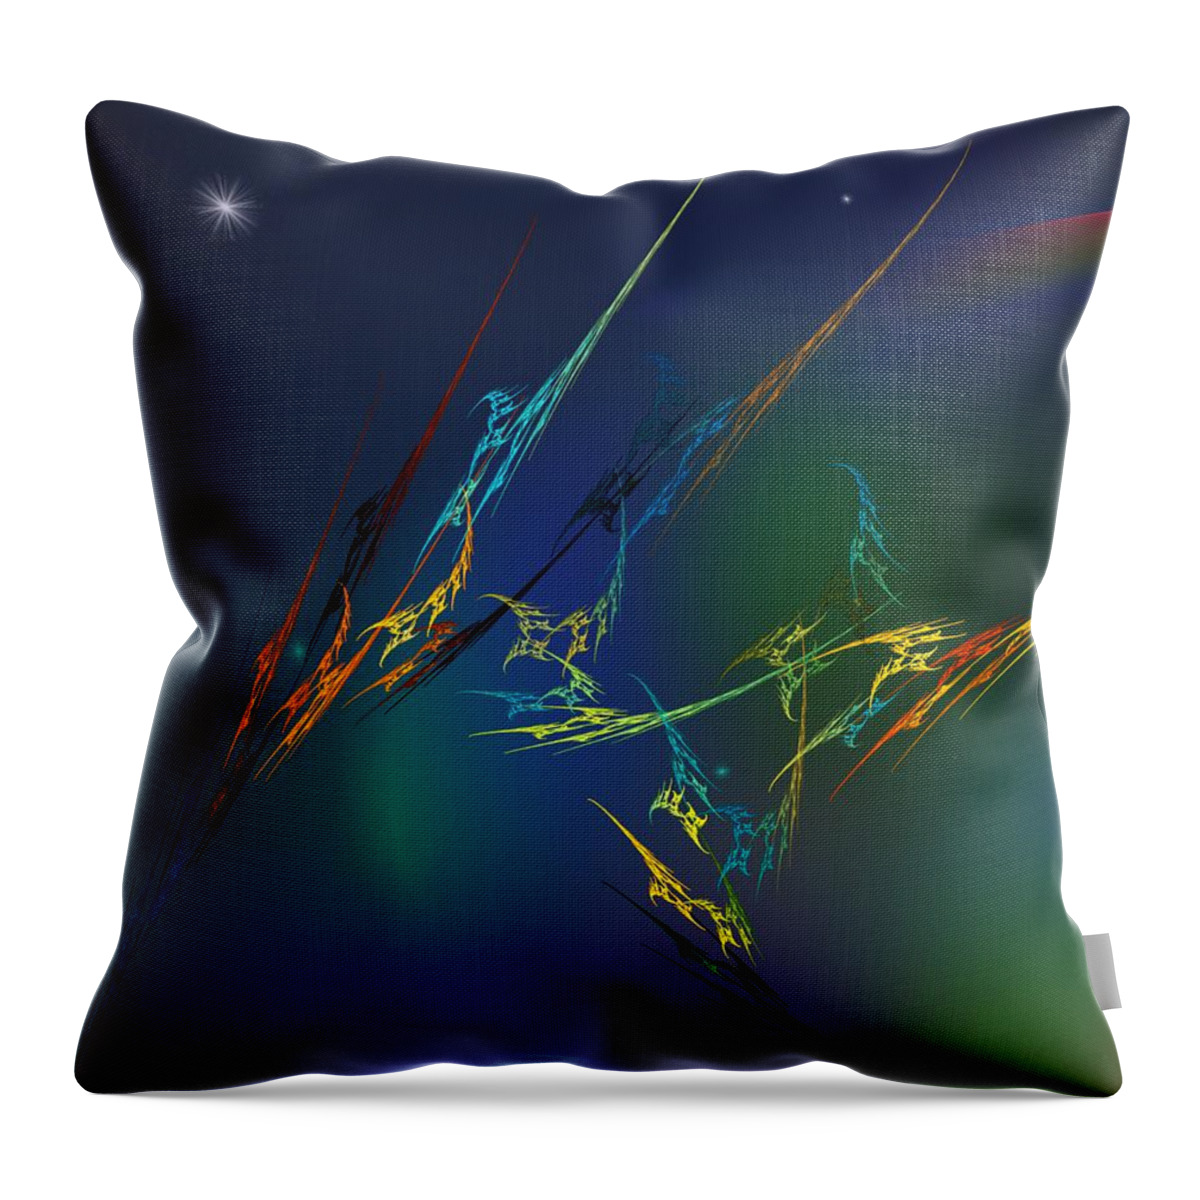 Fine Art Throw Pillow featuring the digital art Ode to Joy by David Lane